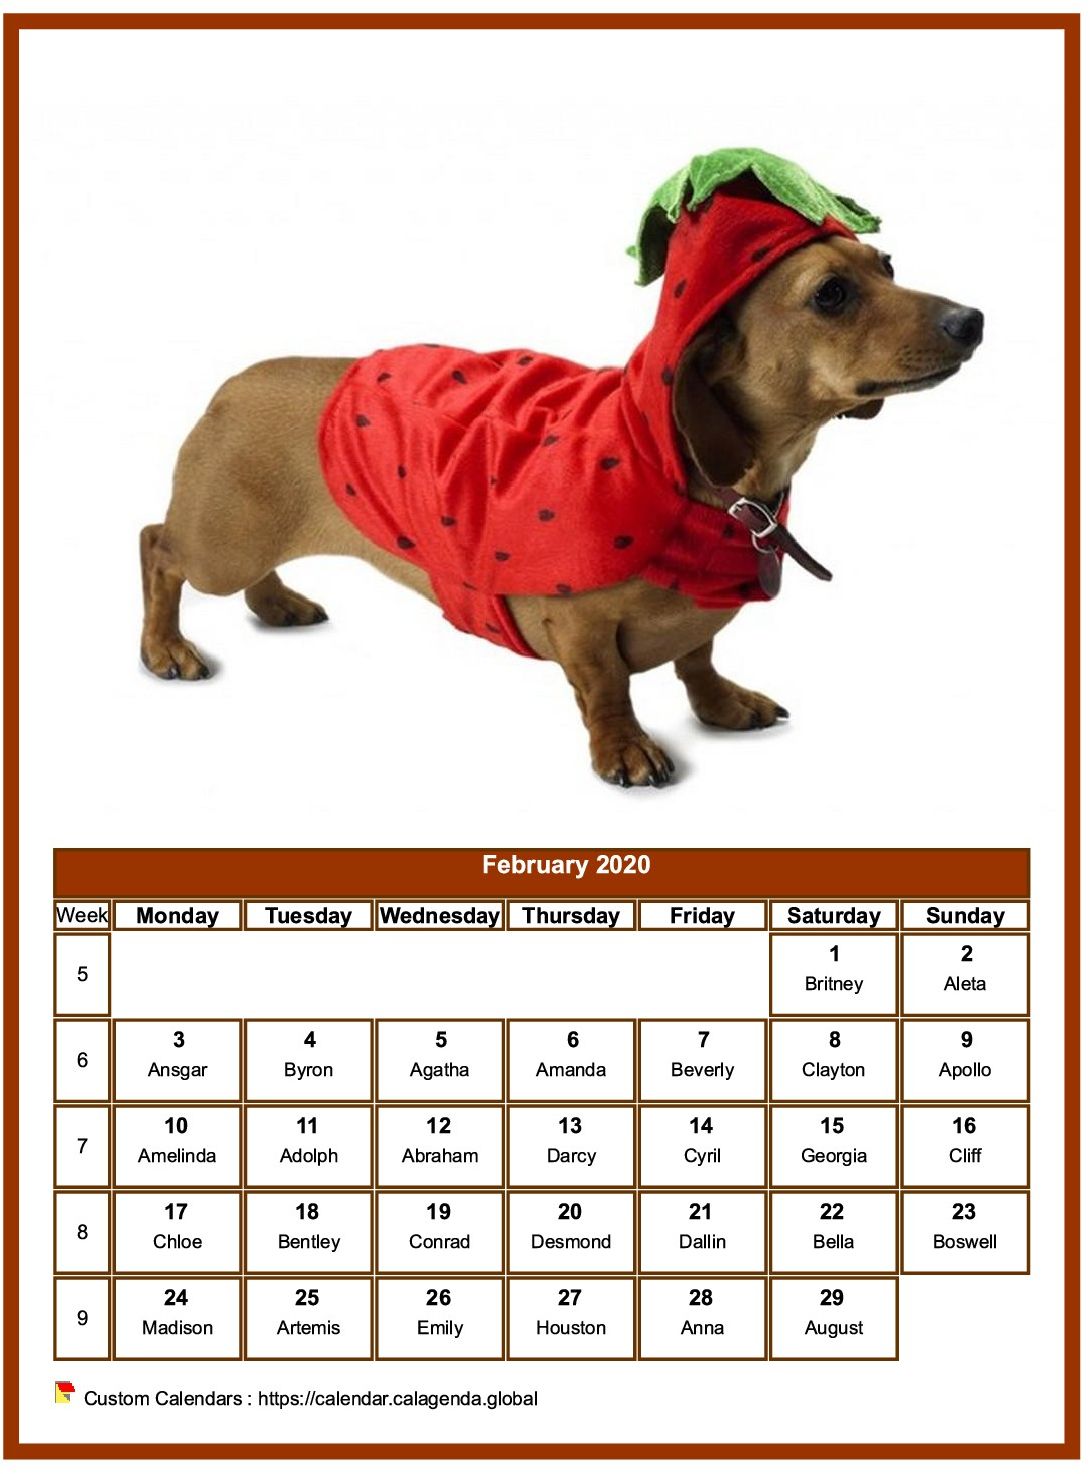 Calendar February 2020 dogs